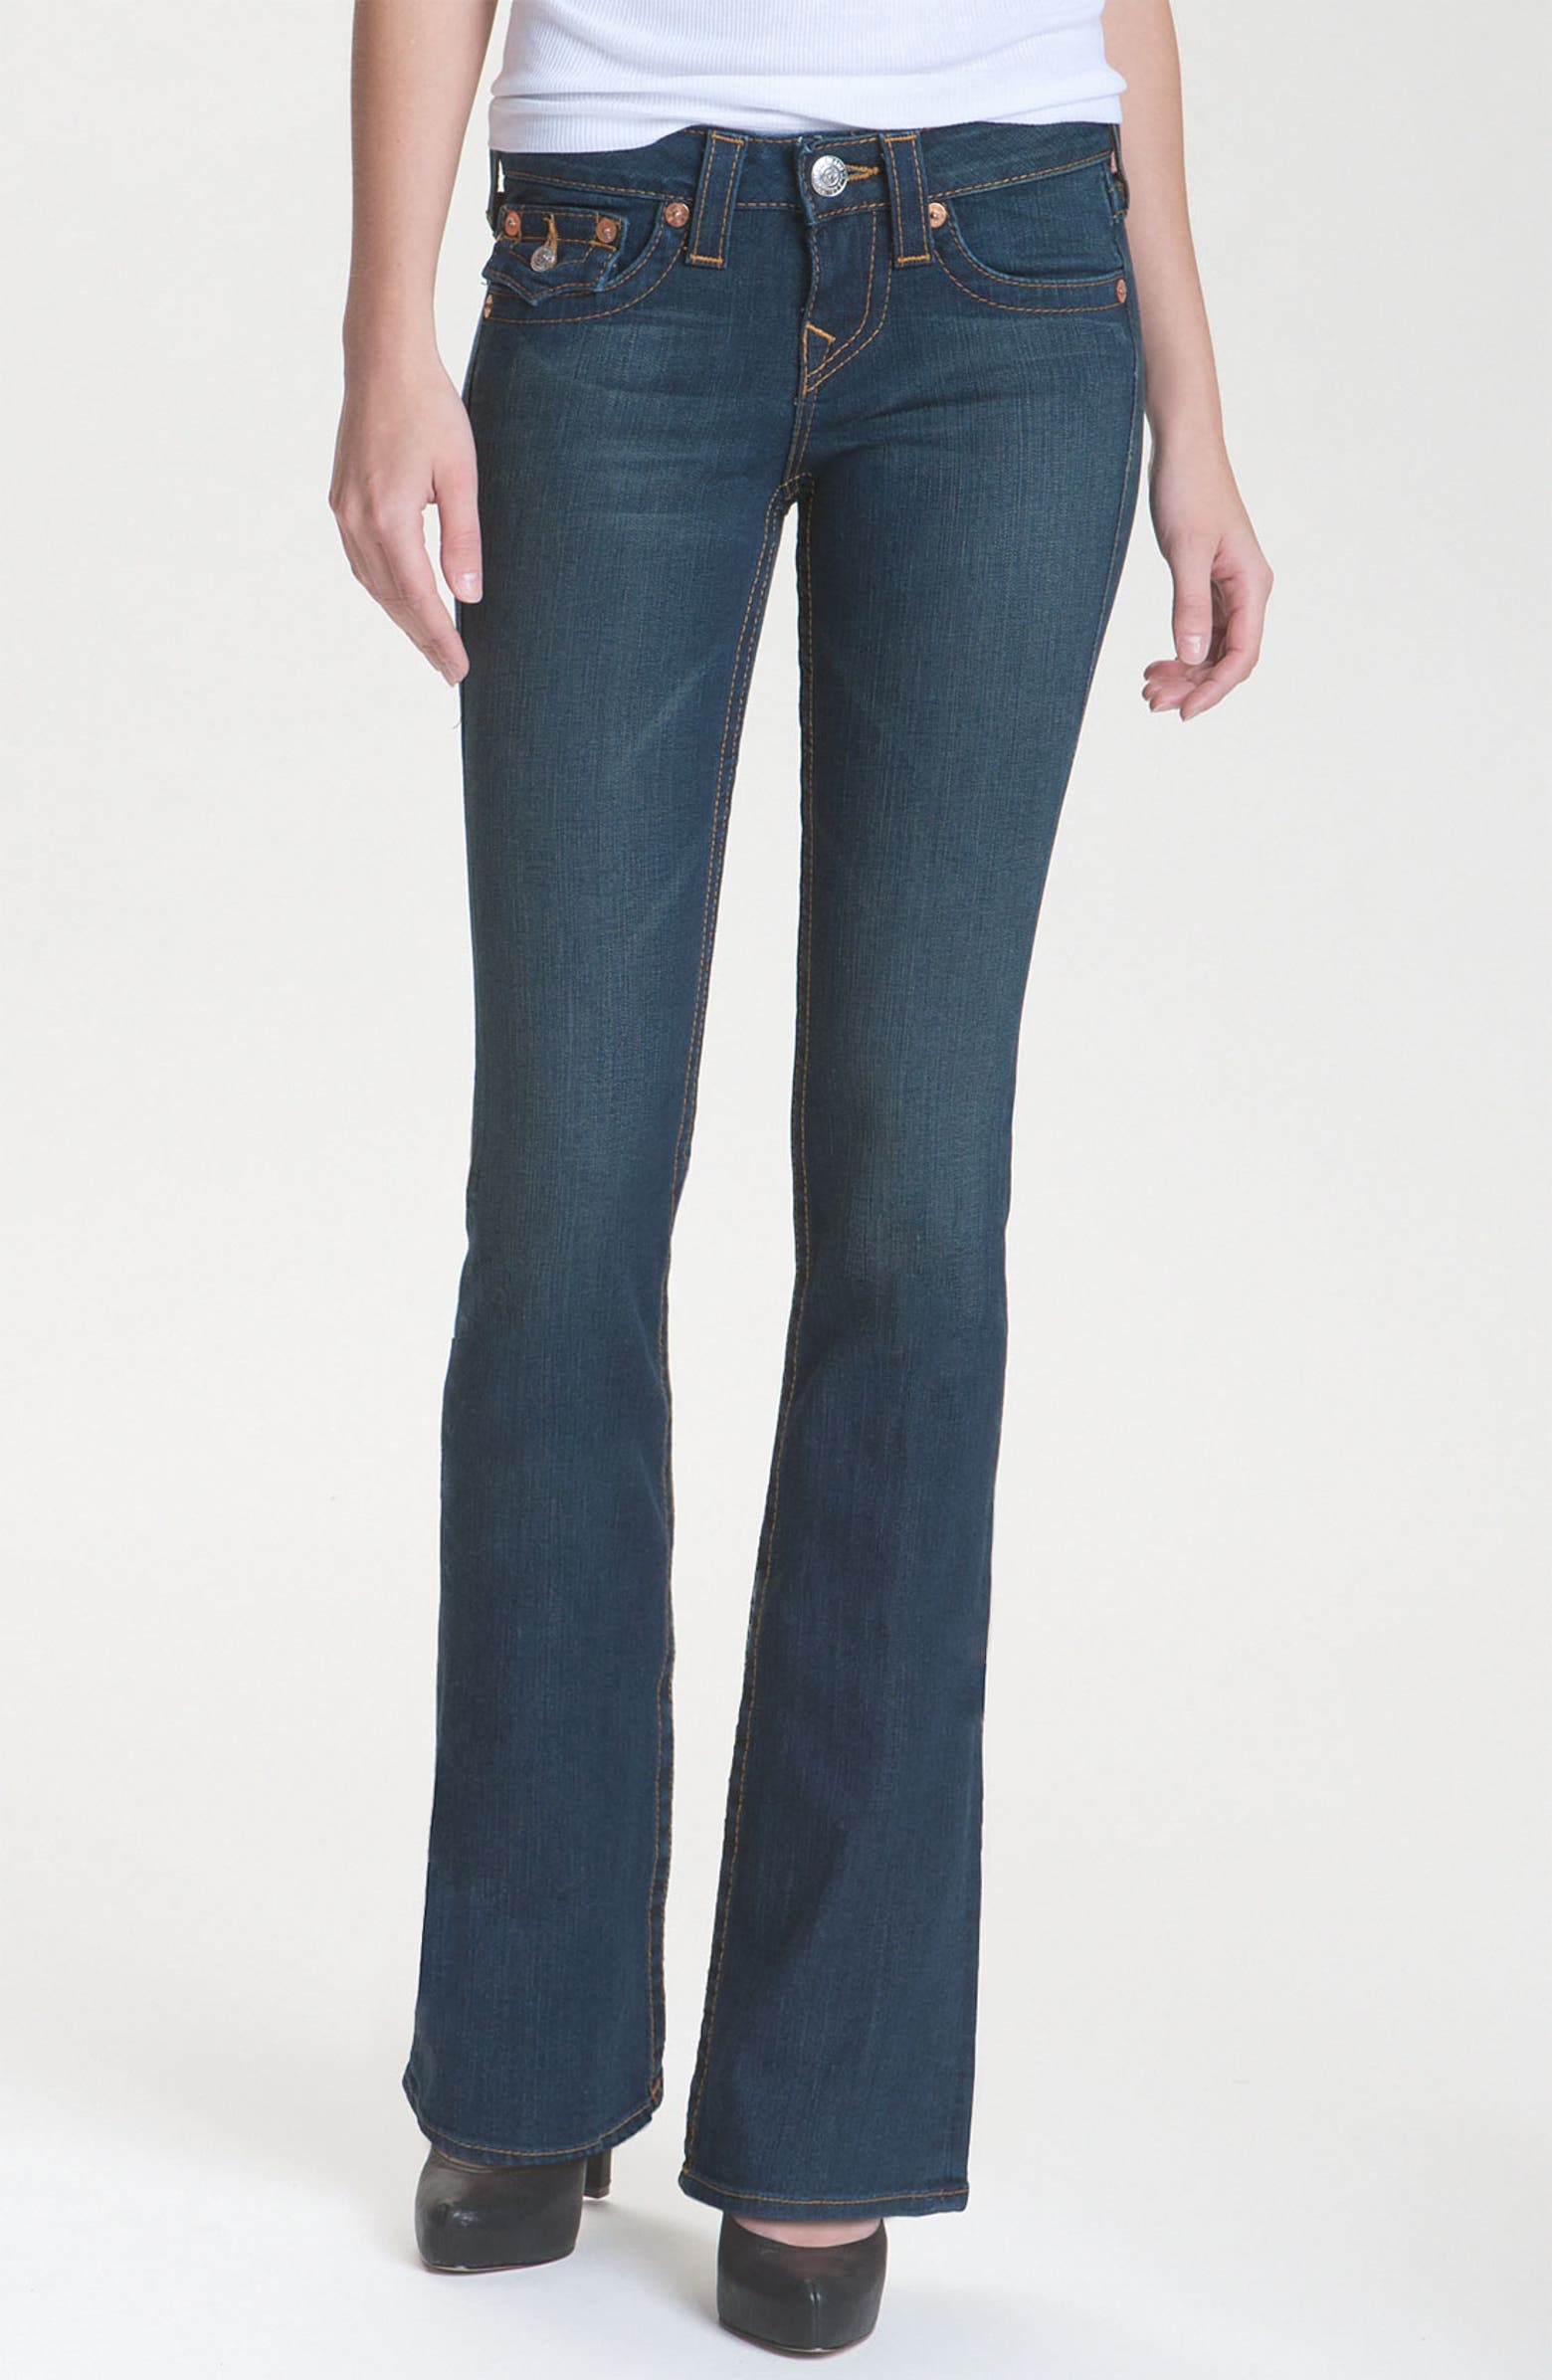 True Religion Brand Jeans 'Becky' Bootcut Jeans (Vera Cruz) (Petite ...